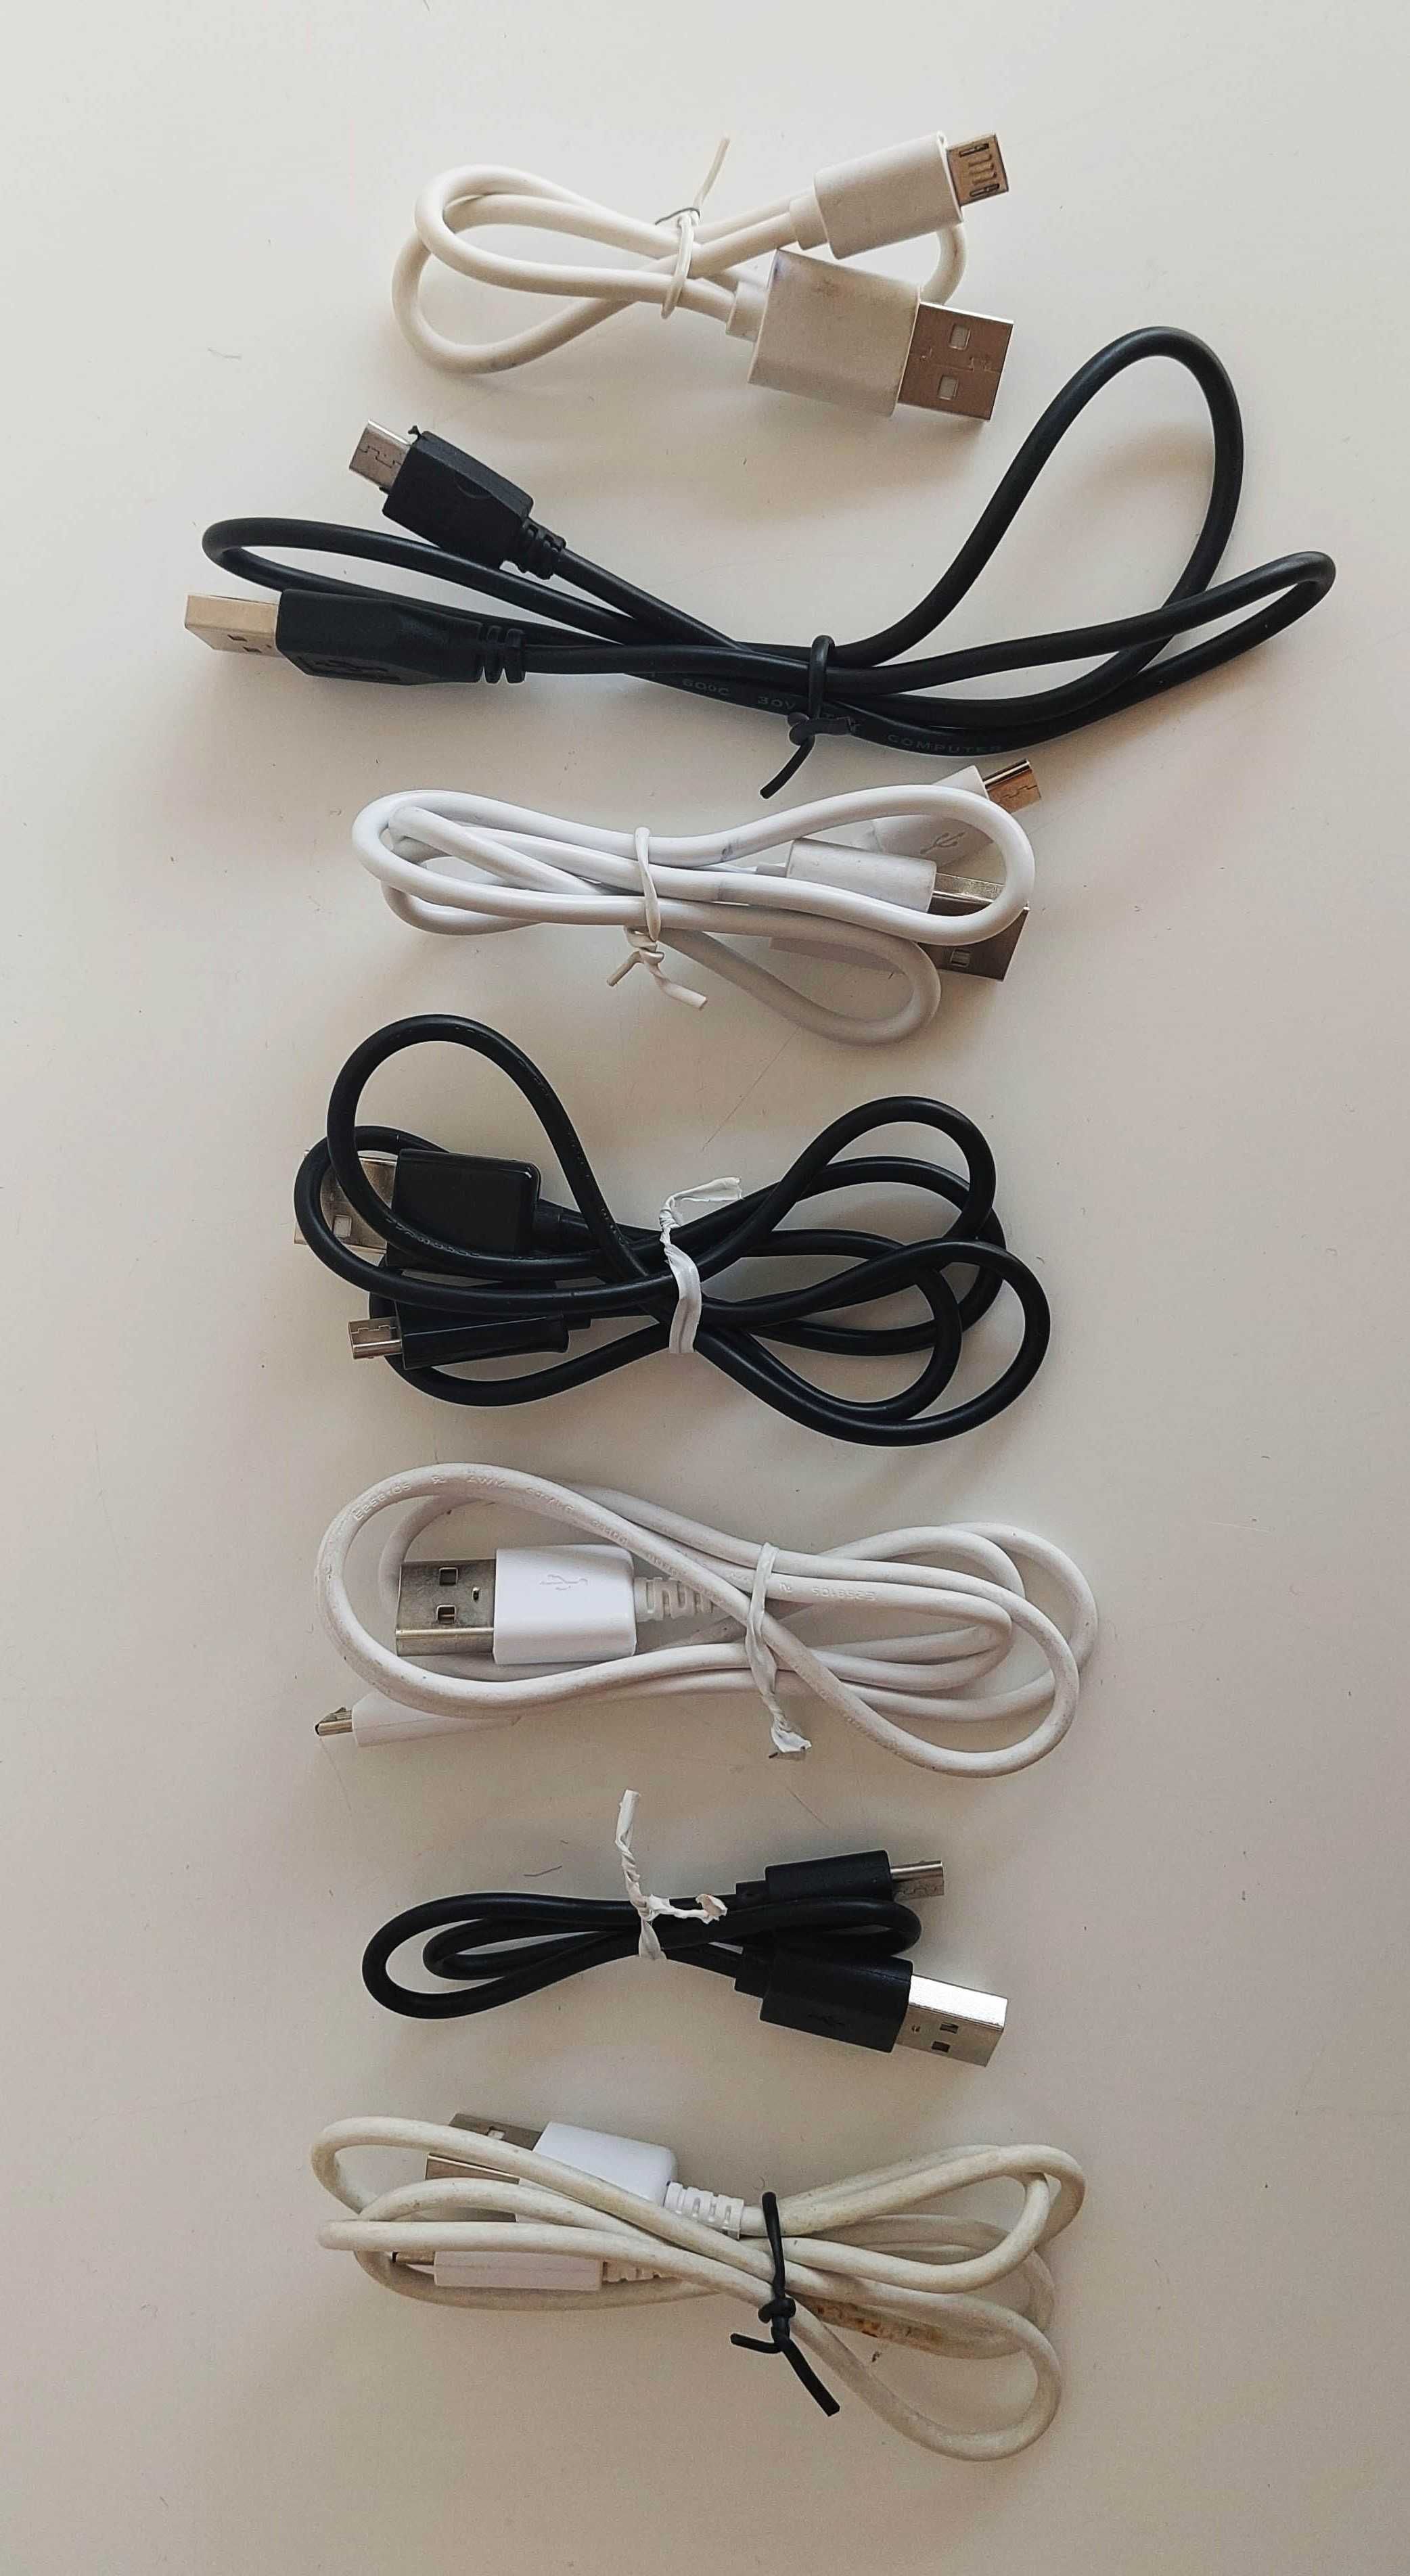 Cabos de conexão / conversores USB 2.0 para USB Mini A